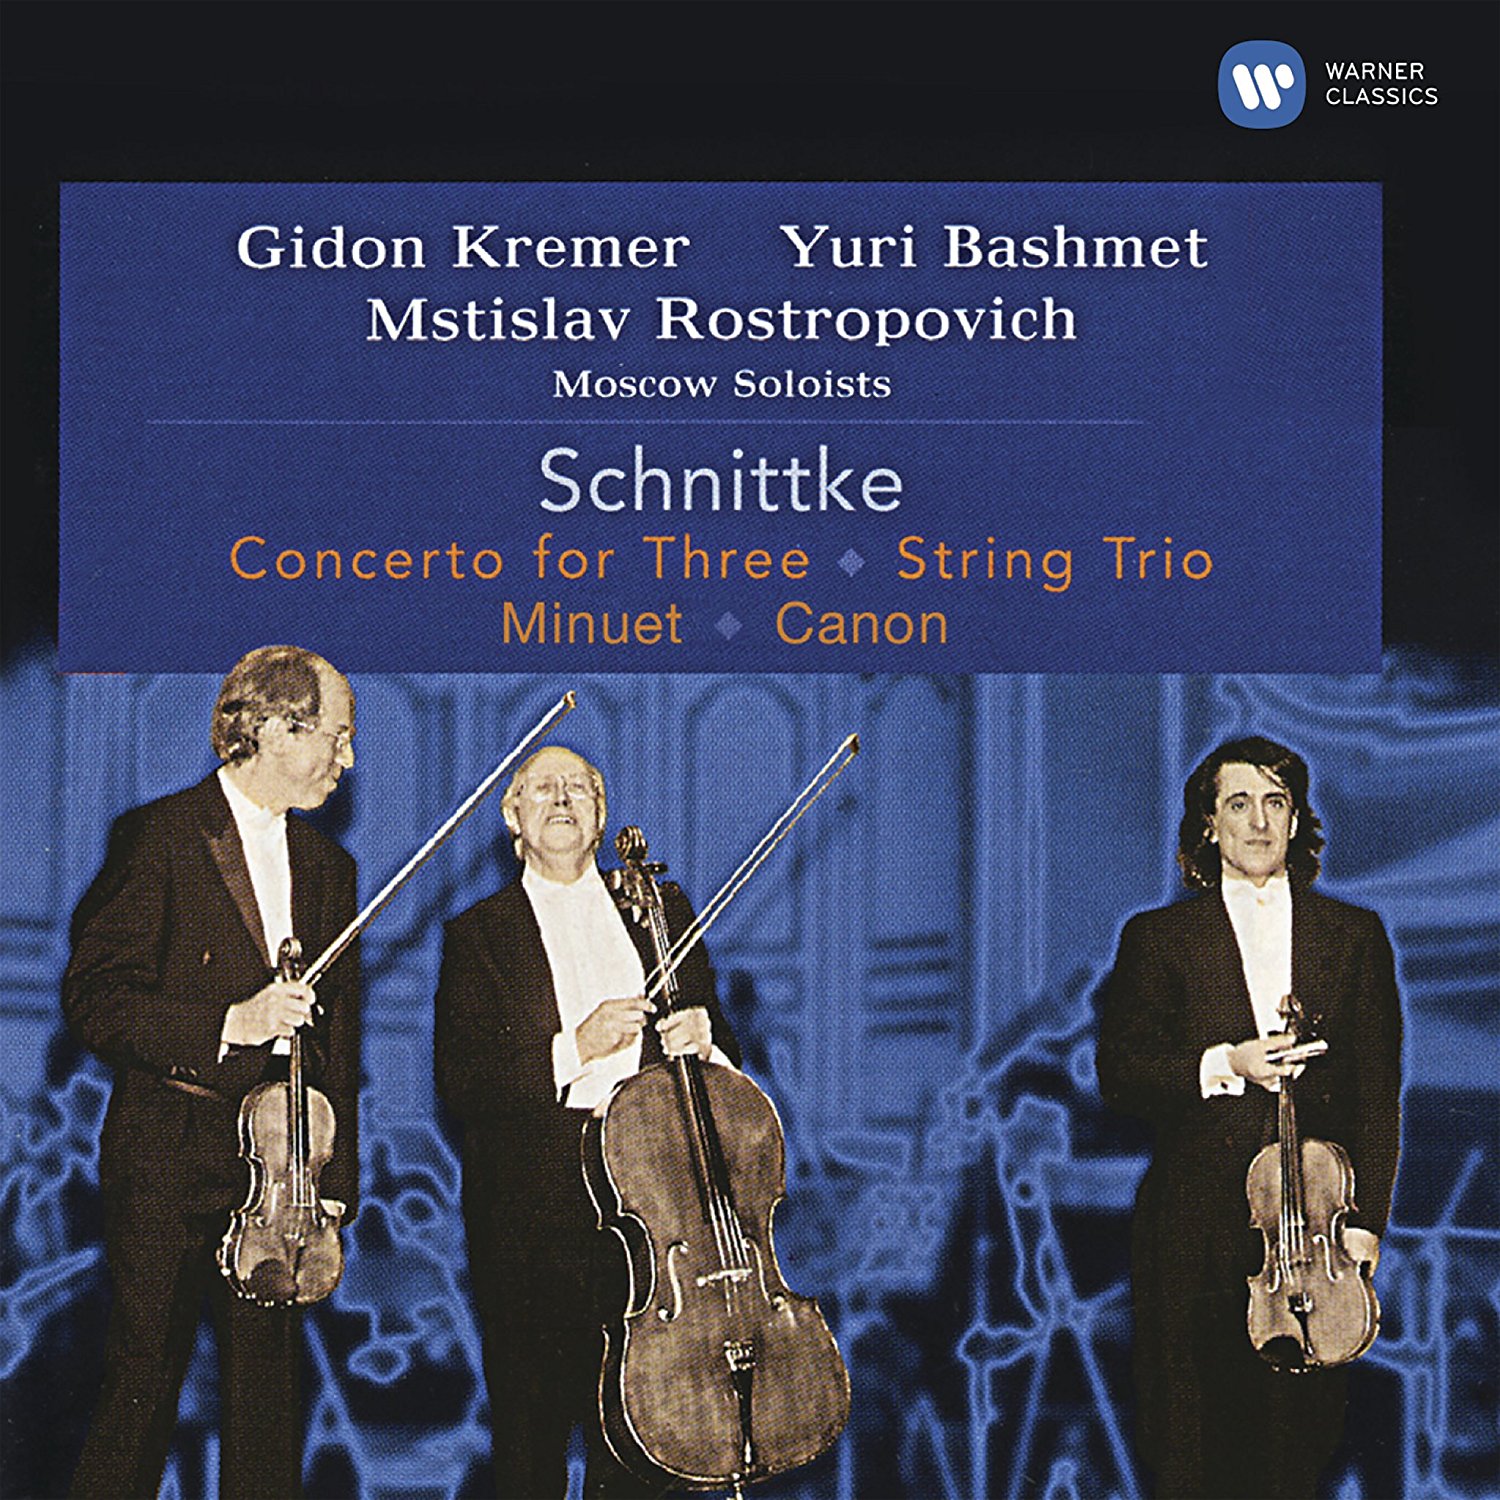 Schnittke: Concerto for Three, String Trio, Minuet | Gidon Kremer, Mstislav Rostropovich, Yuri Bashmet